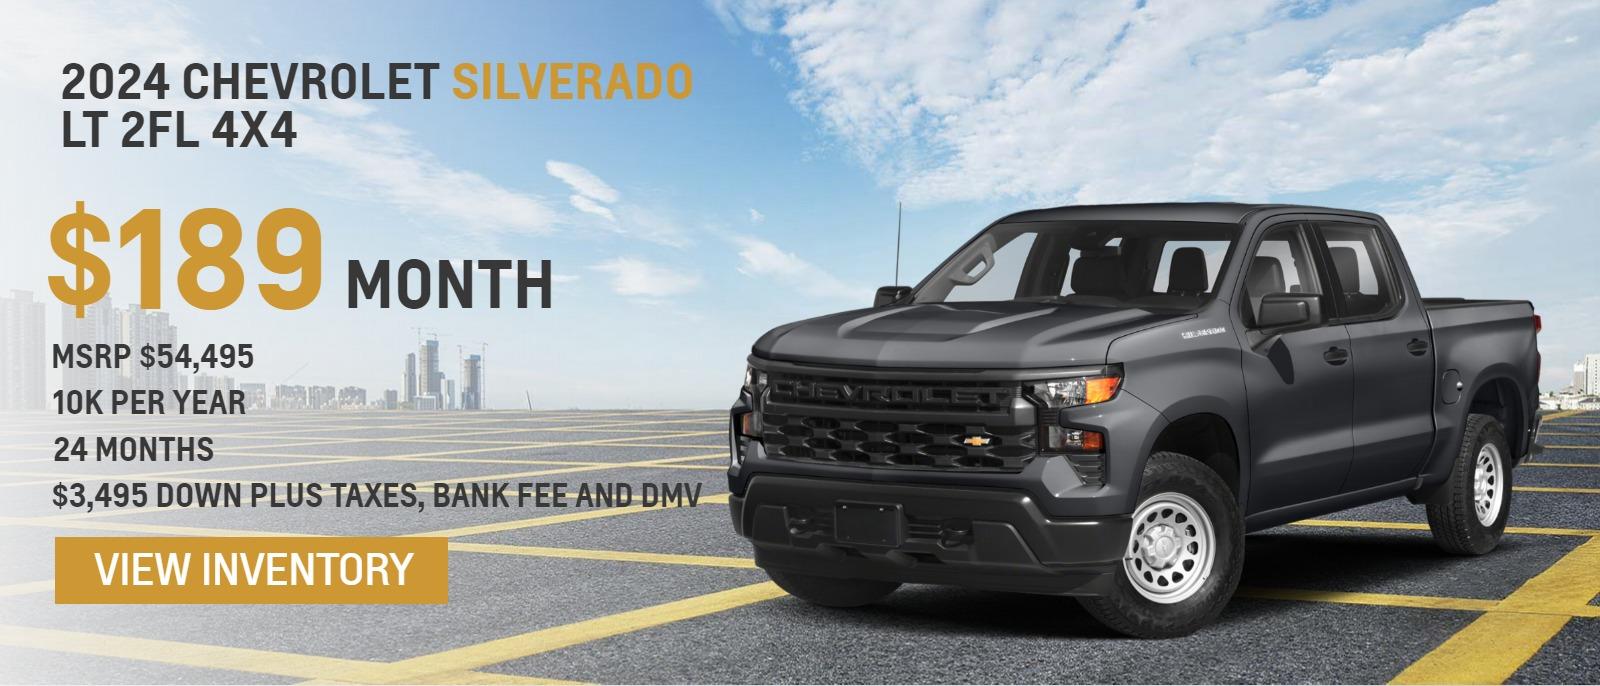 2024 Chevrolet Silverado LT 2FL 4X4
MSRP $54,495.
10k per year
24 months
$189. month
$3,495 down plus taxes, bank fee and DMV